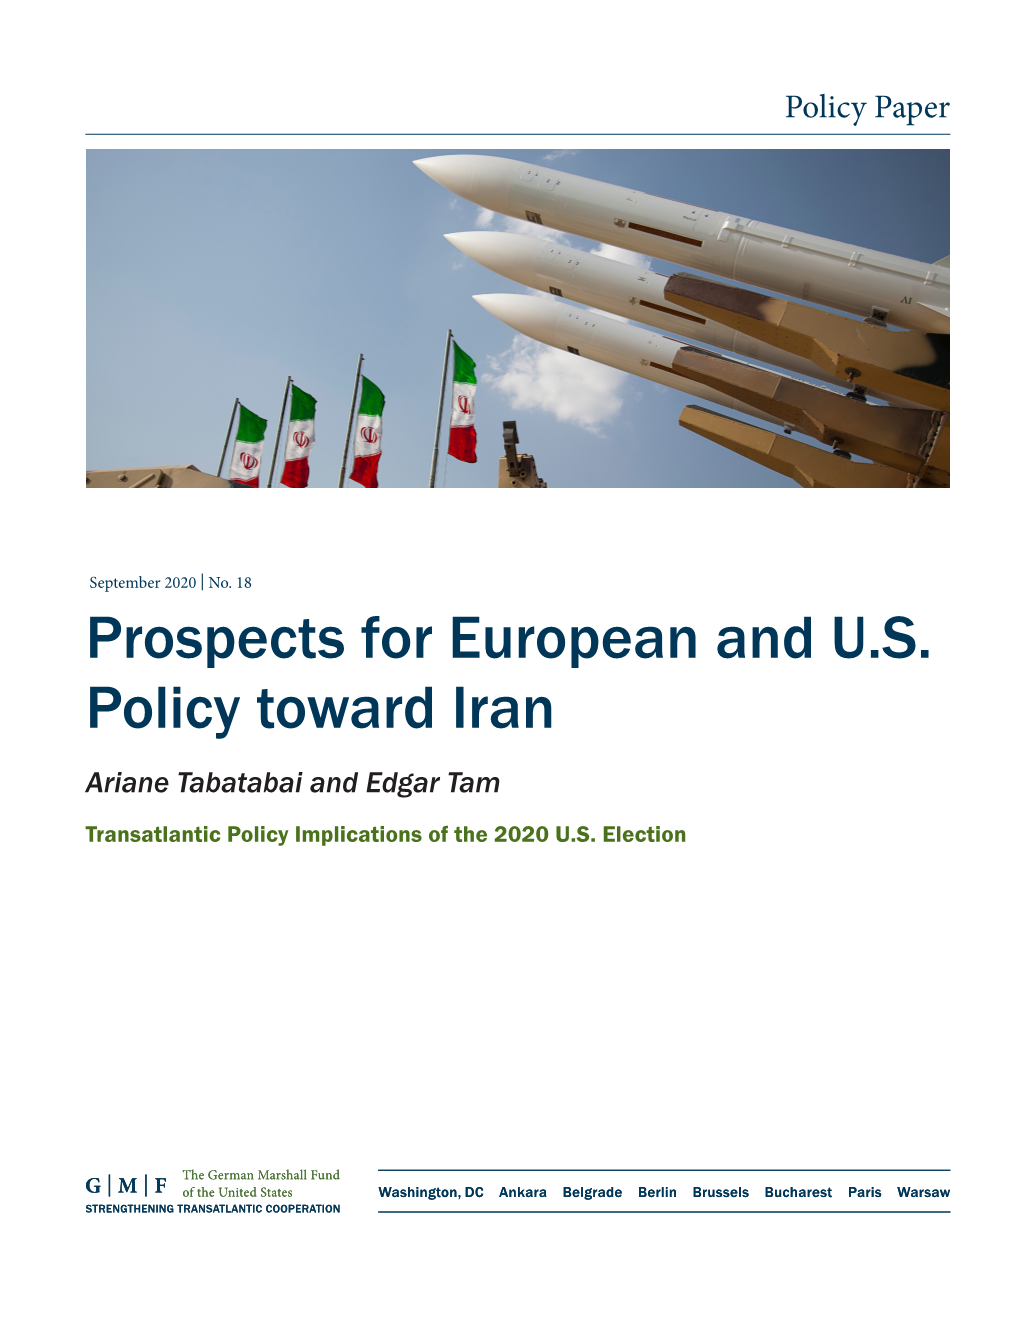 Prospects for European and U.S. Policy Toward Iran Ariane Tabatabai and Edgar Tam